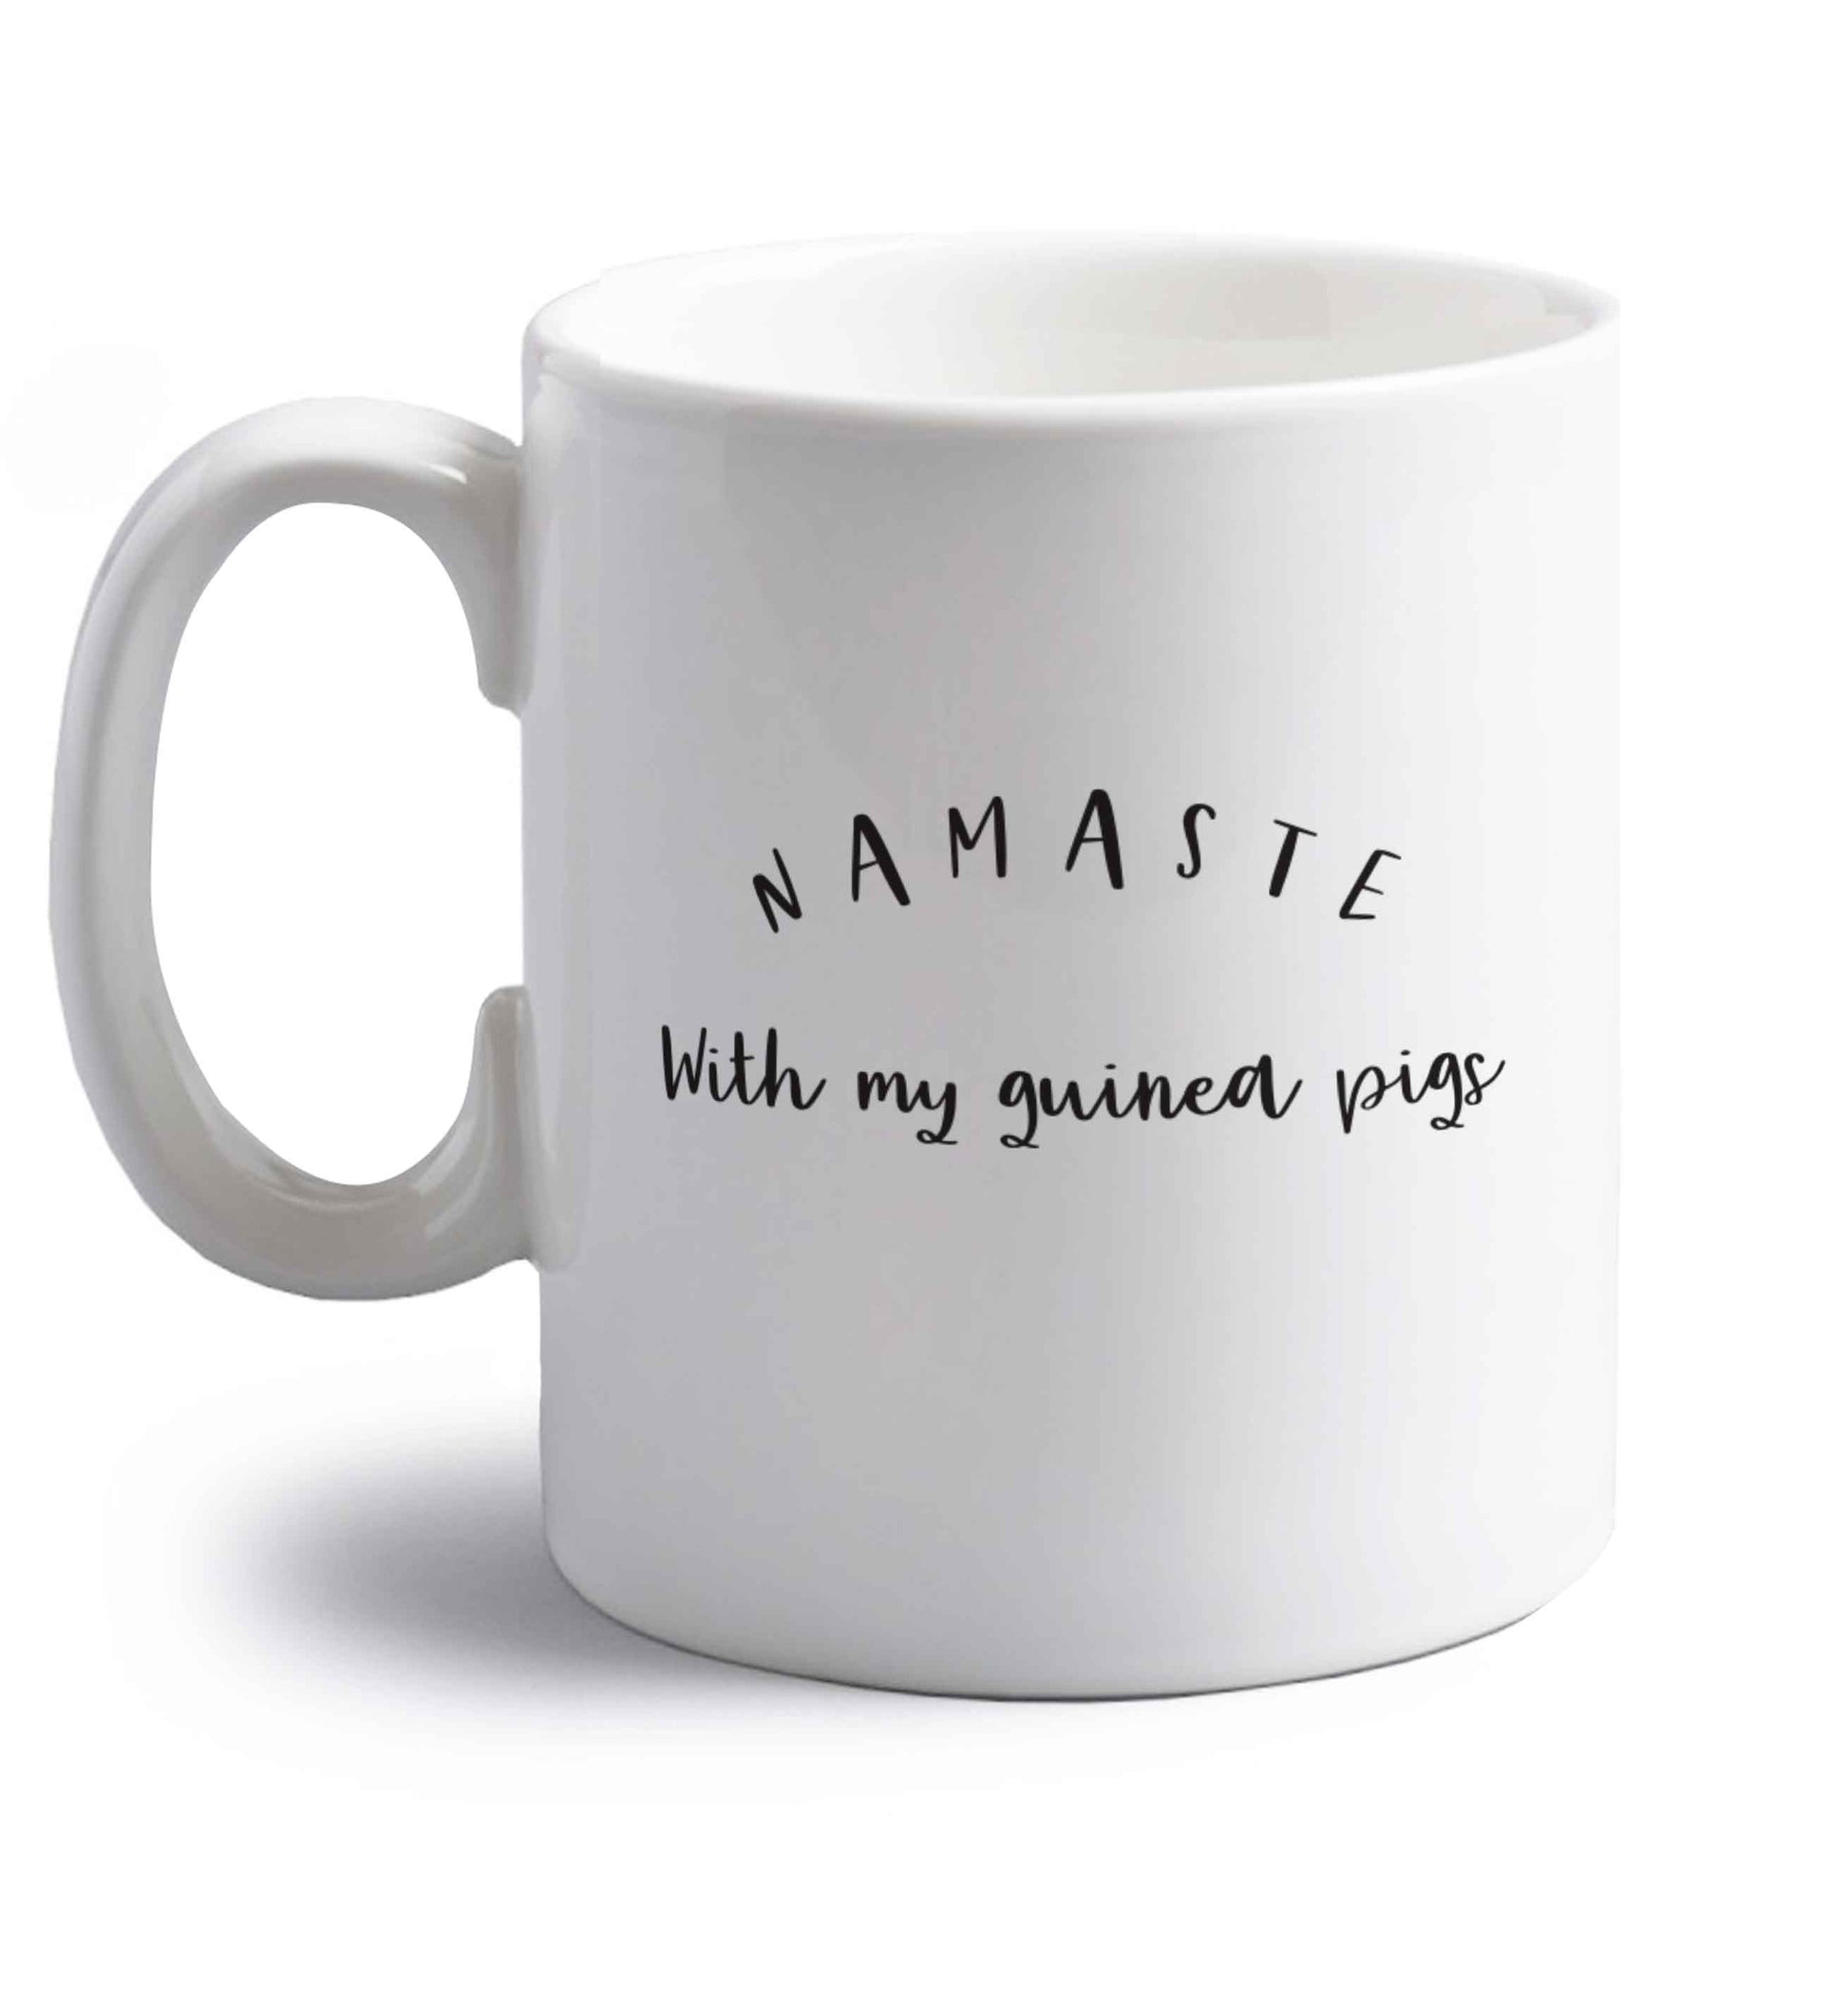 Namaste with my guinea pigs right handed white ceramic mug 